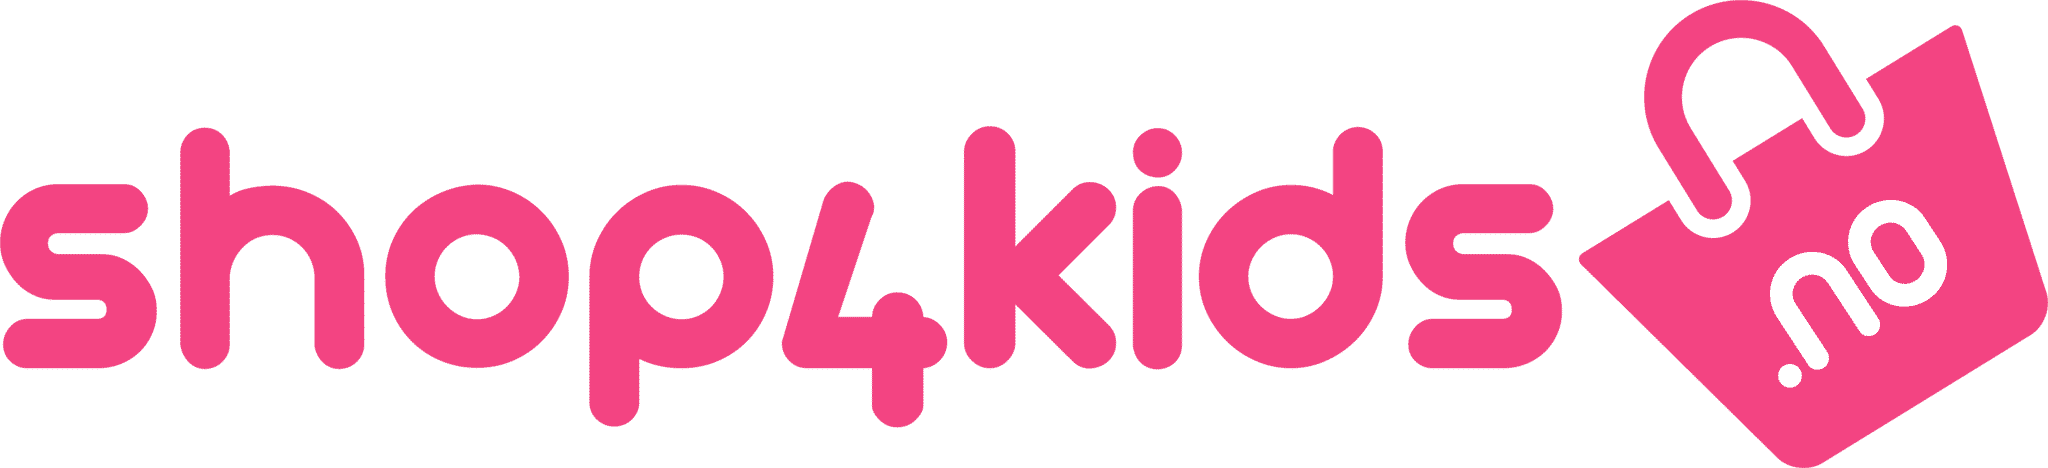 shop4kids_transparet_logo